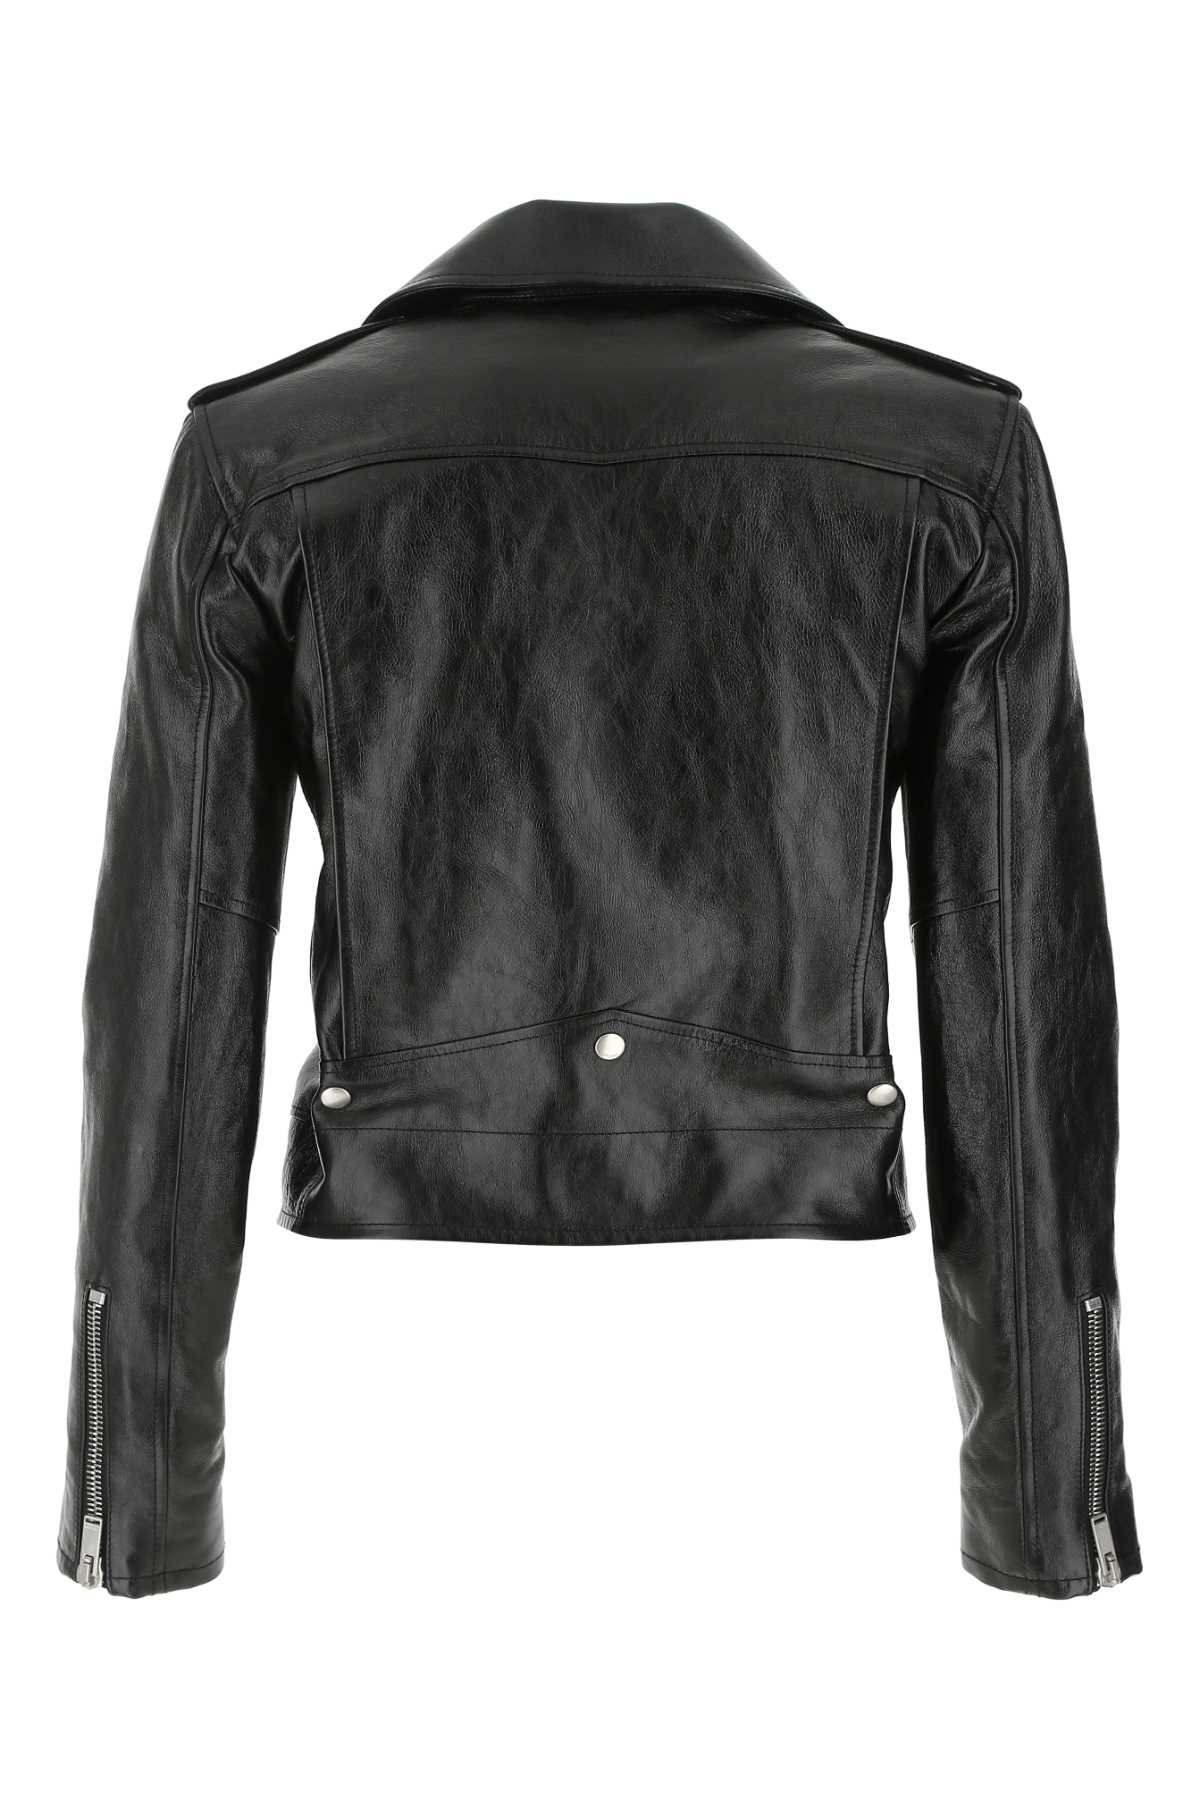 Saint Laurent Black Leather Jacket In 1000